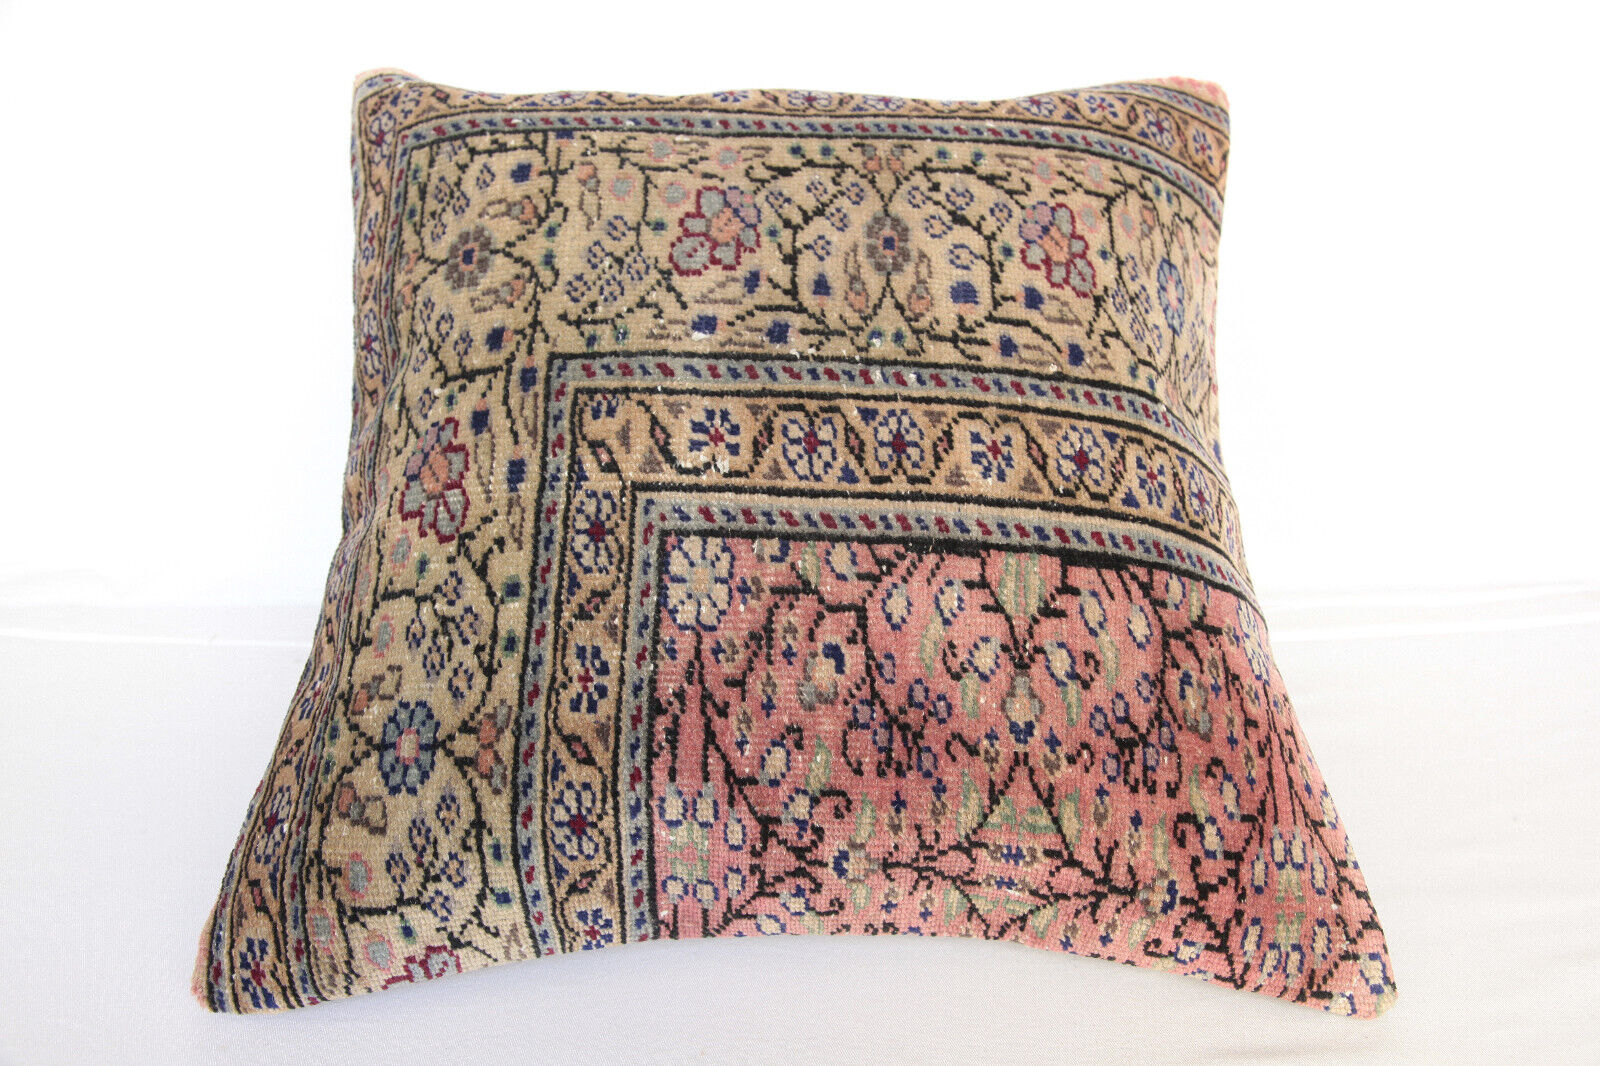 18X18 pillow,Handknotted pillow,Vintage pillow, rug pillows,sofa pillow,cushions